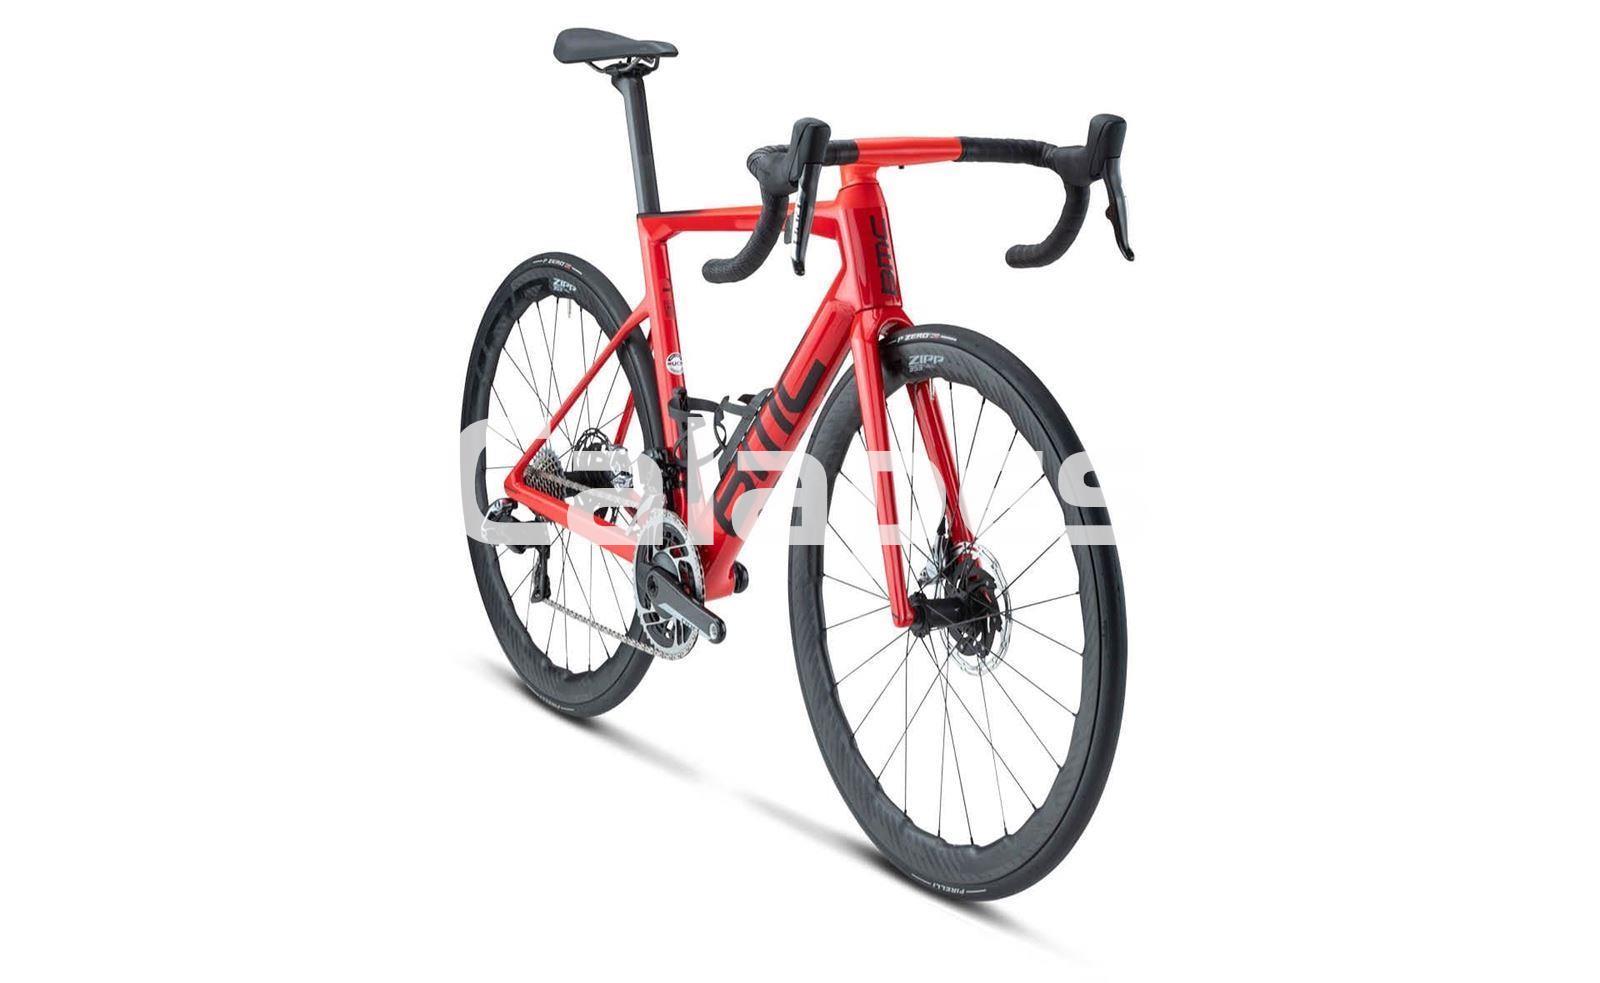 Bicicleta BMC Teammachine SLR 01 ONE SRAM Red AXS eTap Power Meter 12v - Imagen 1